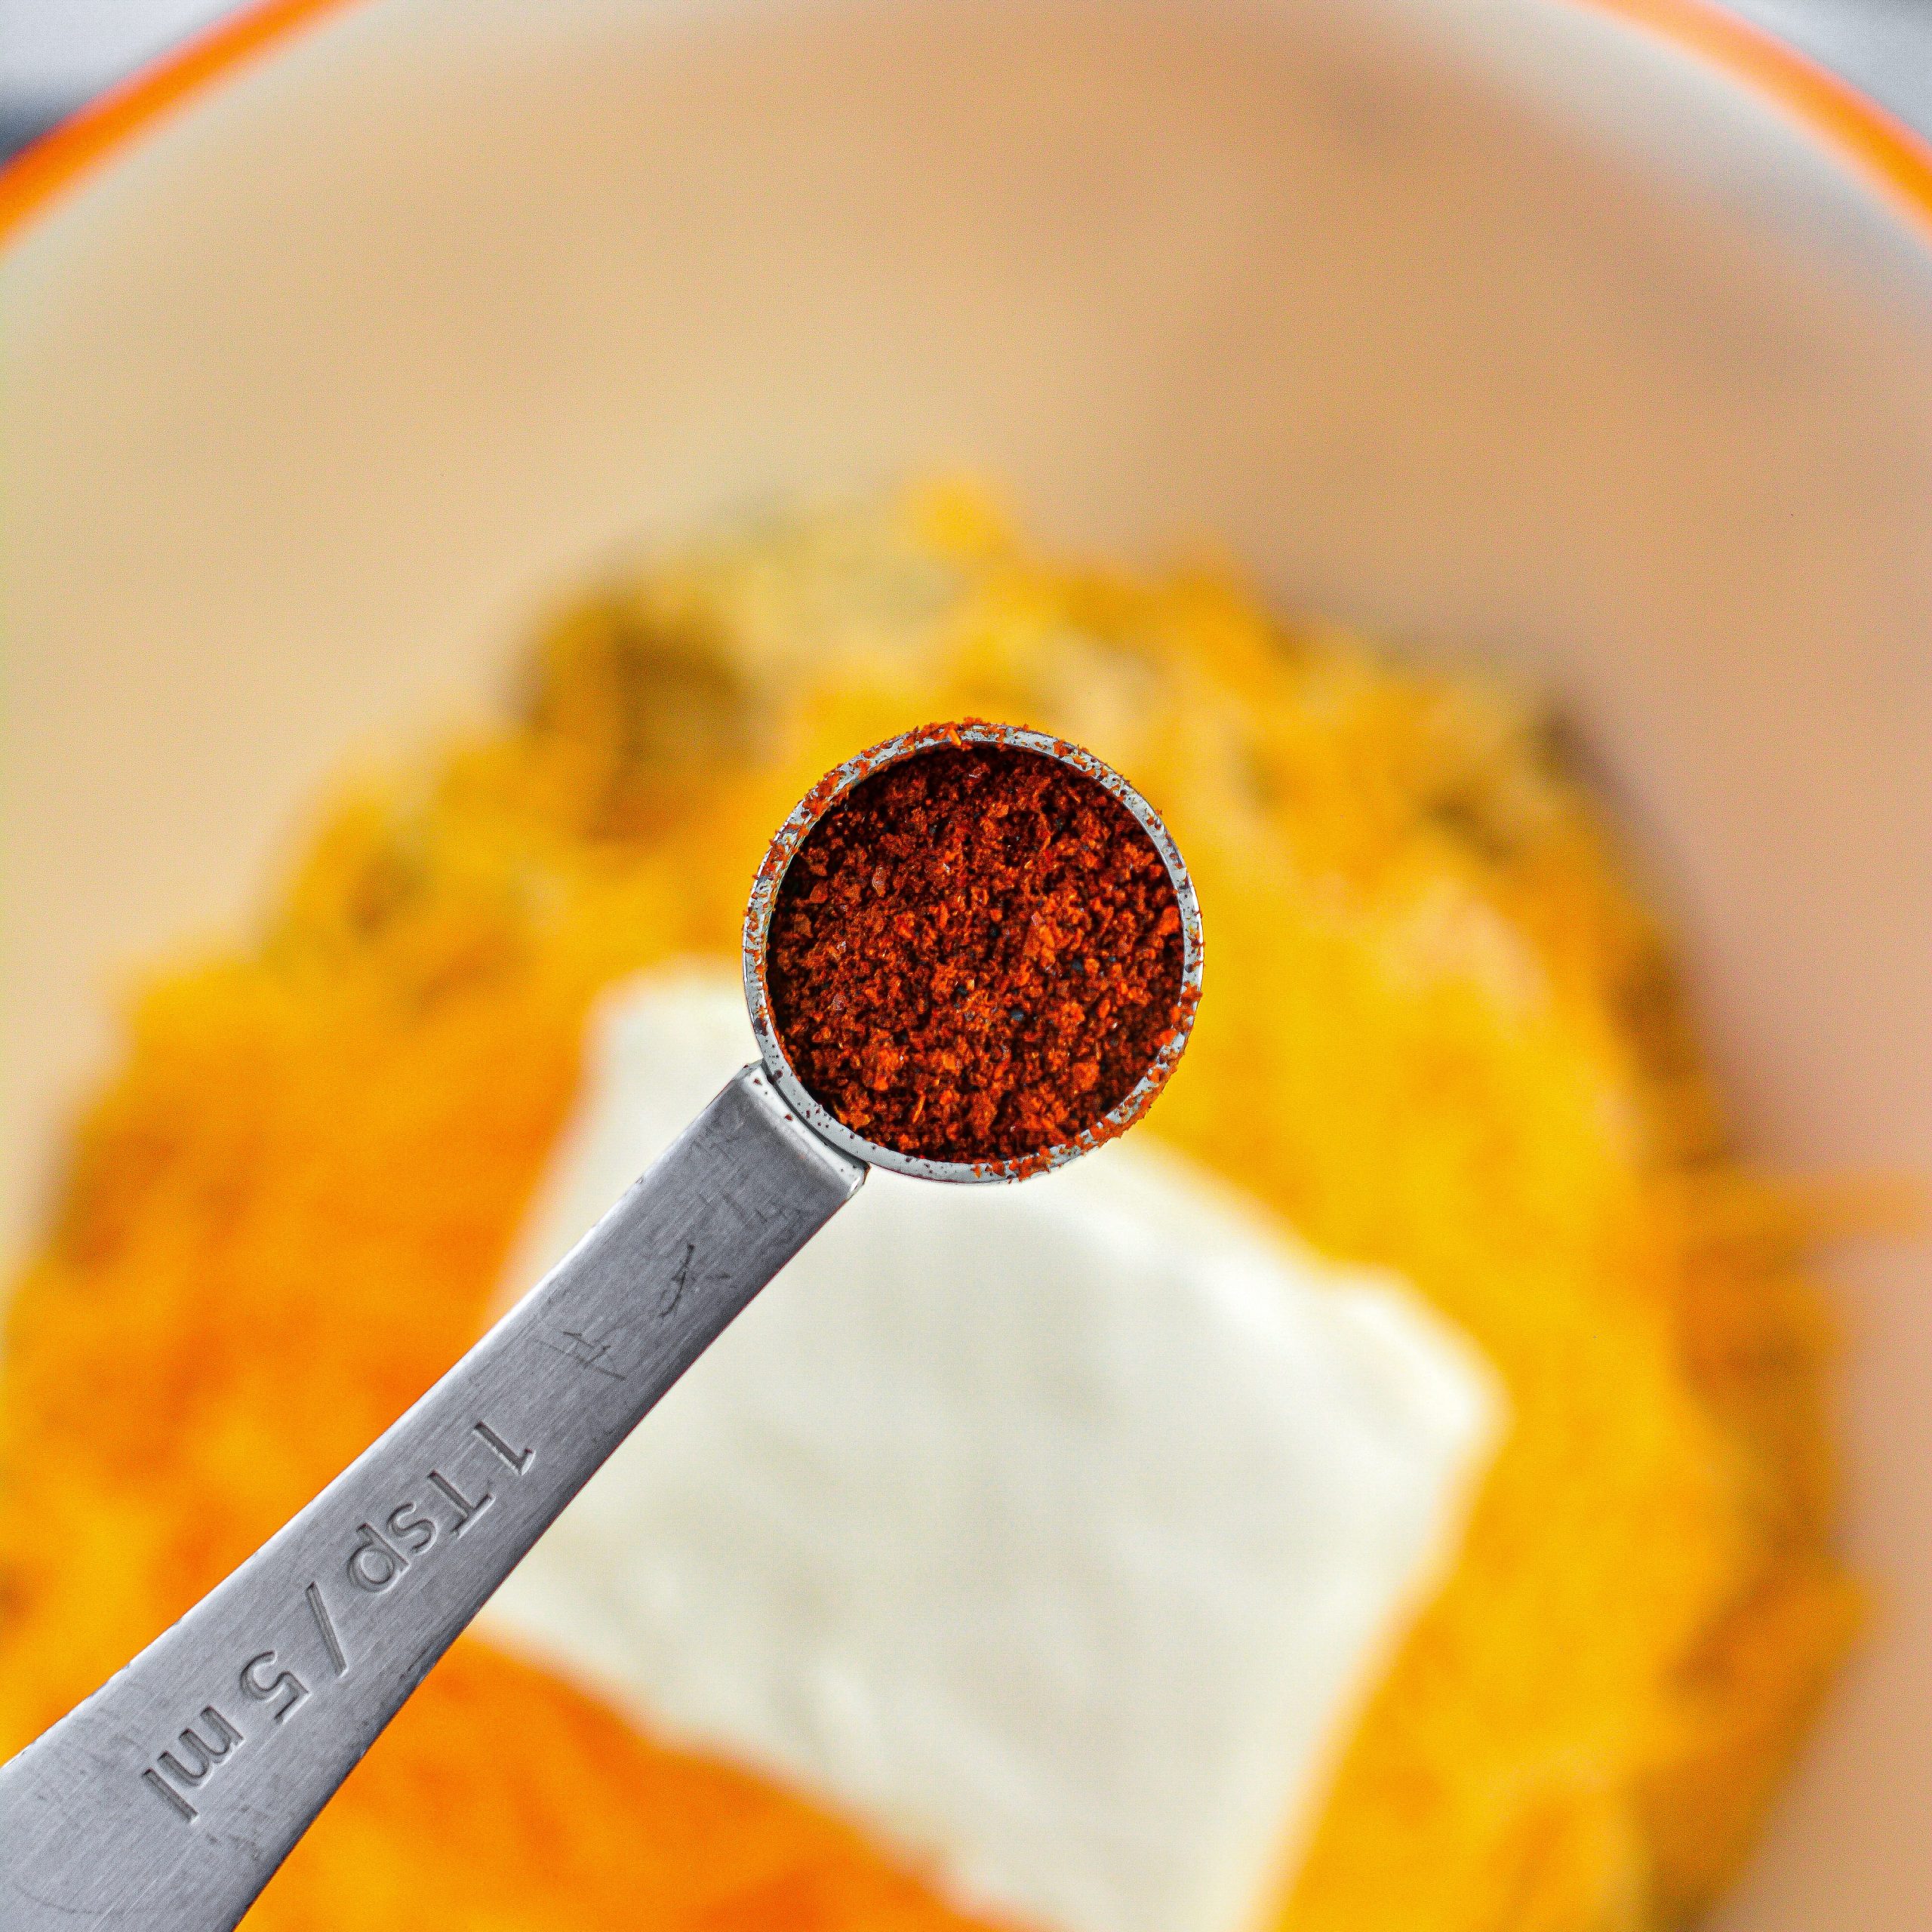 Start adding the seasonings by adding 1 ½ tsp of chili powder.